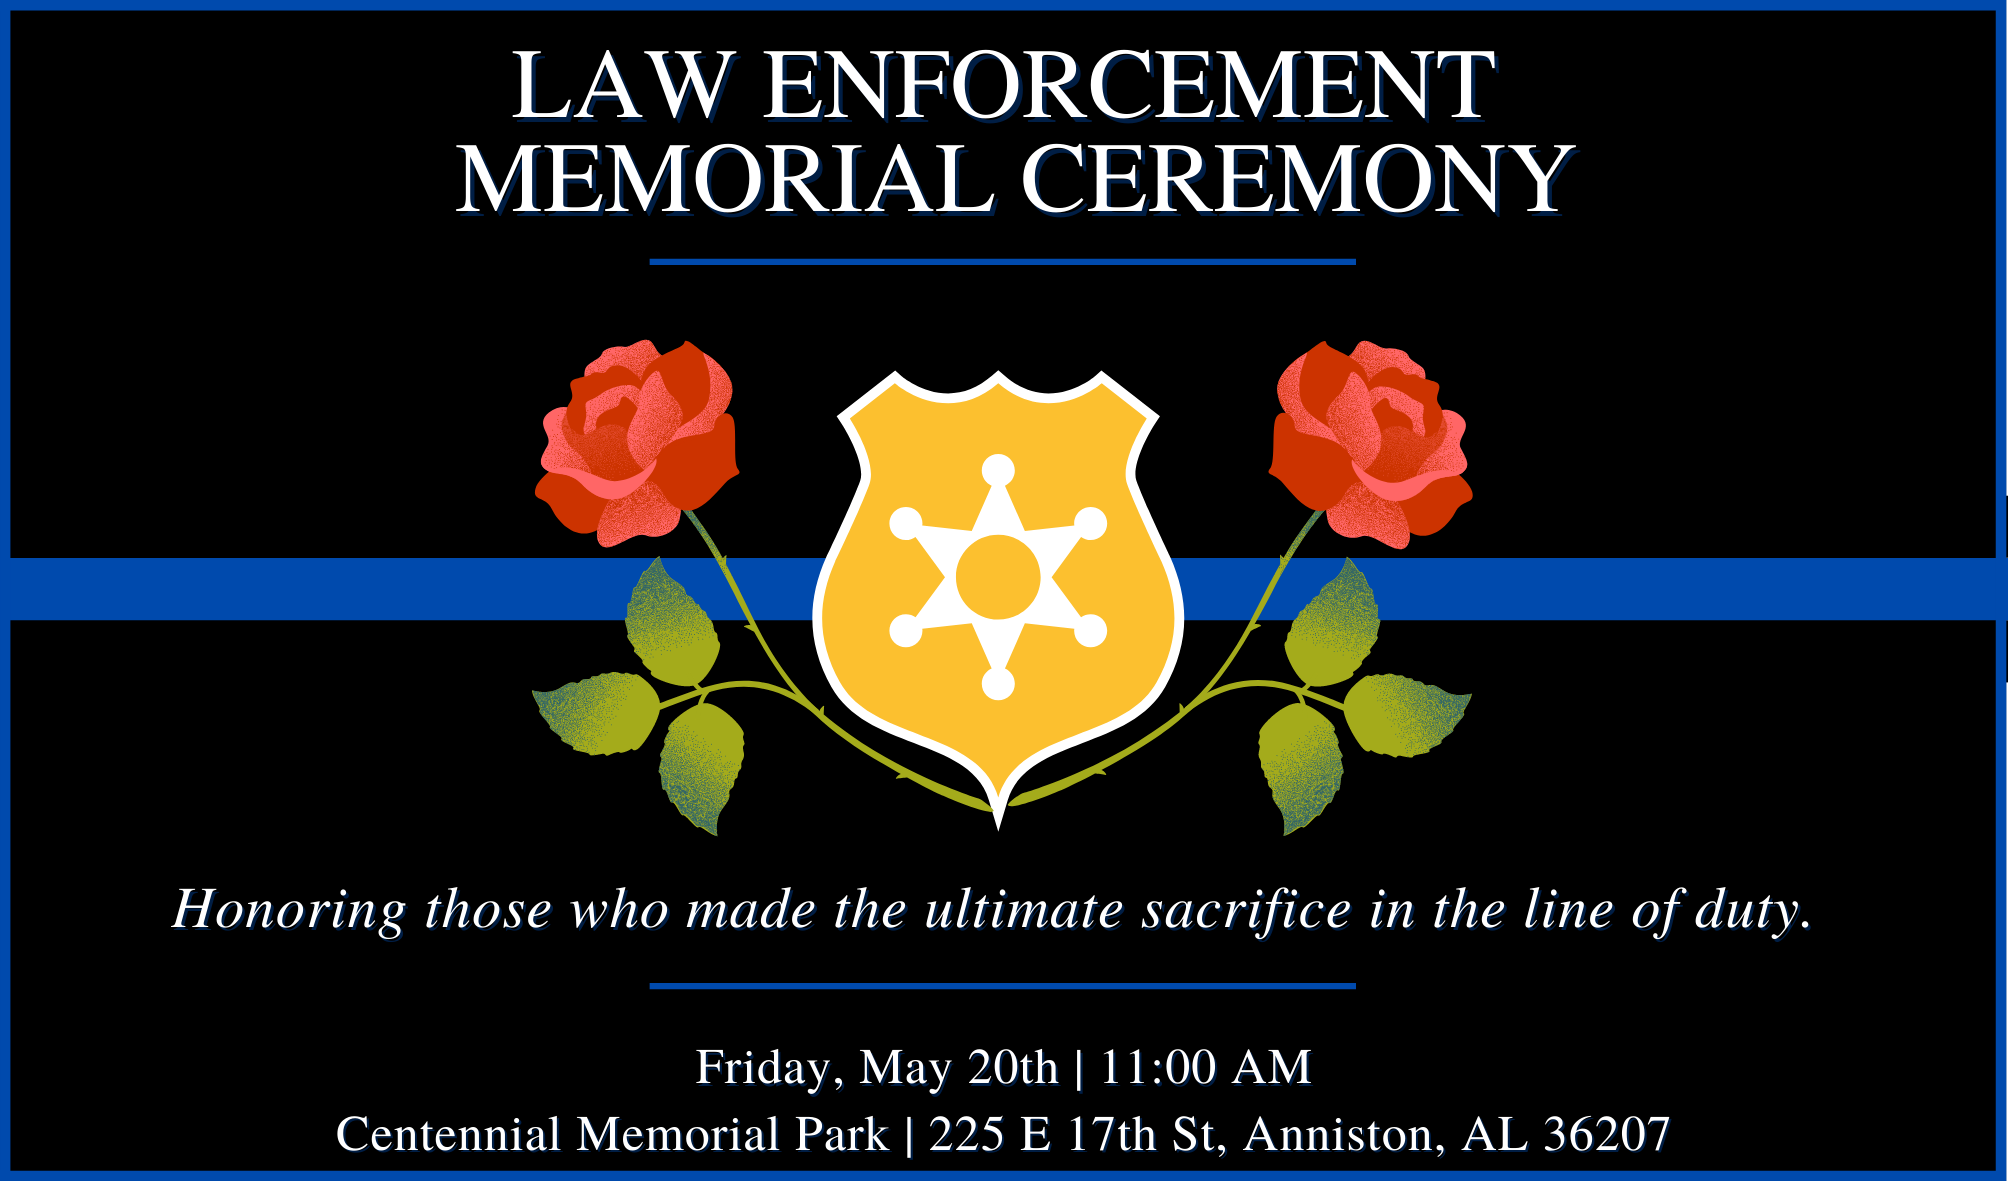 Law Enforcement memorial ceremony